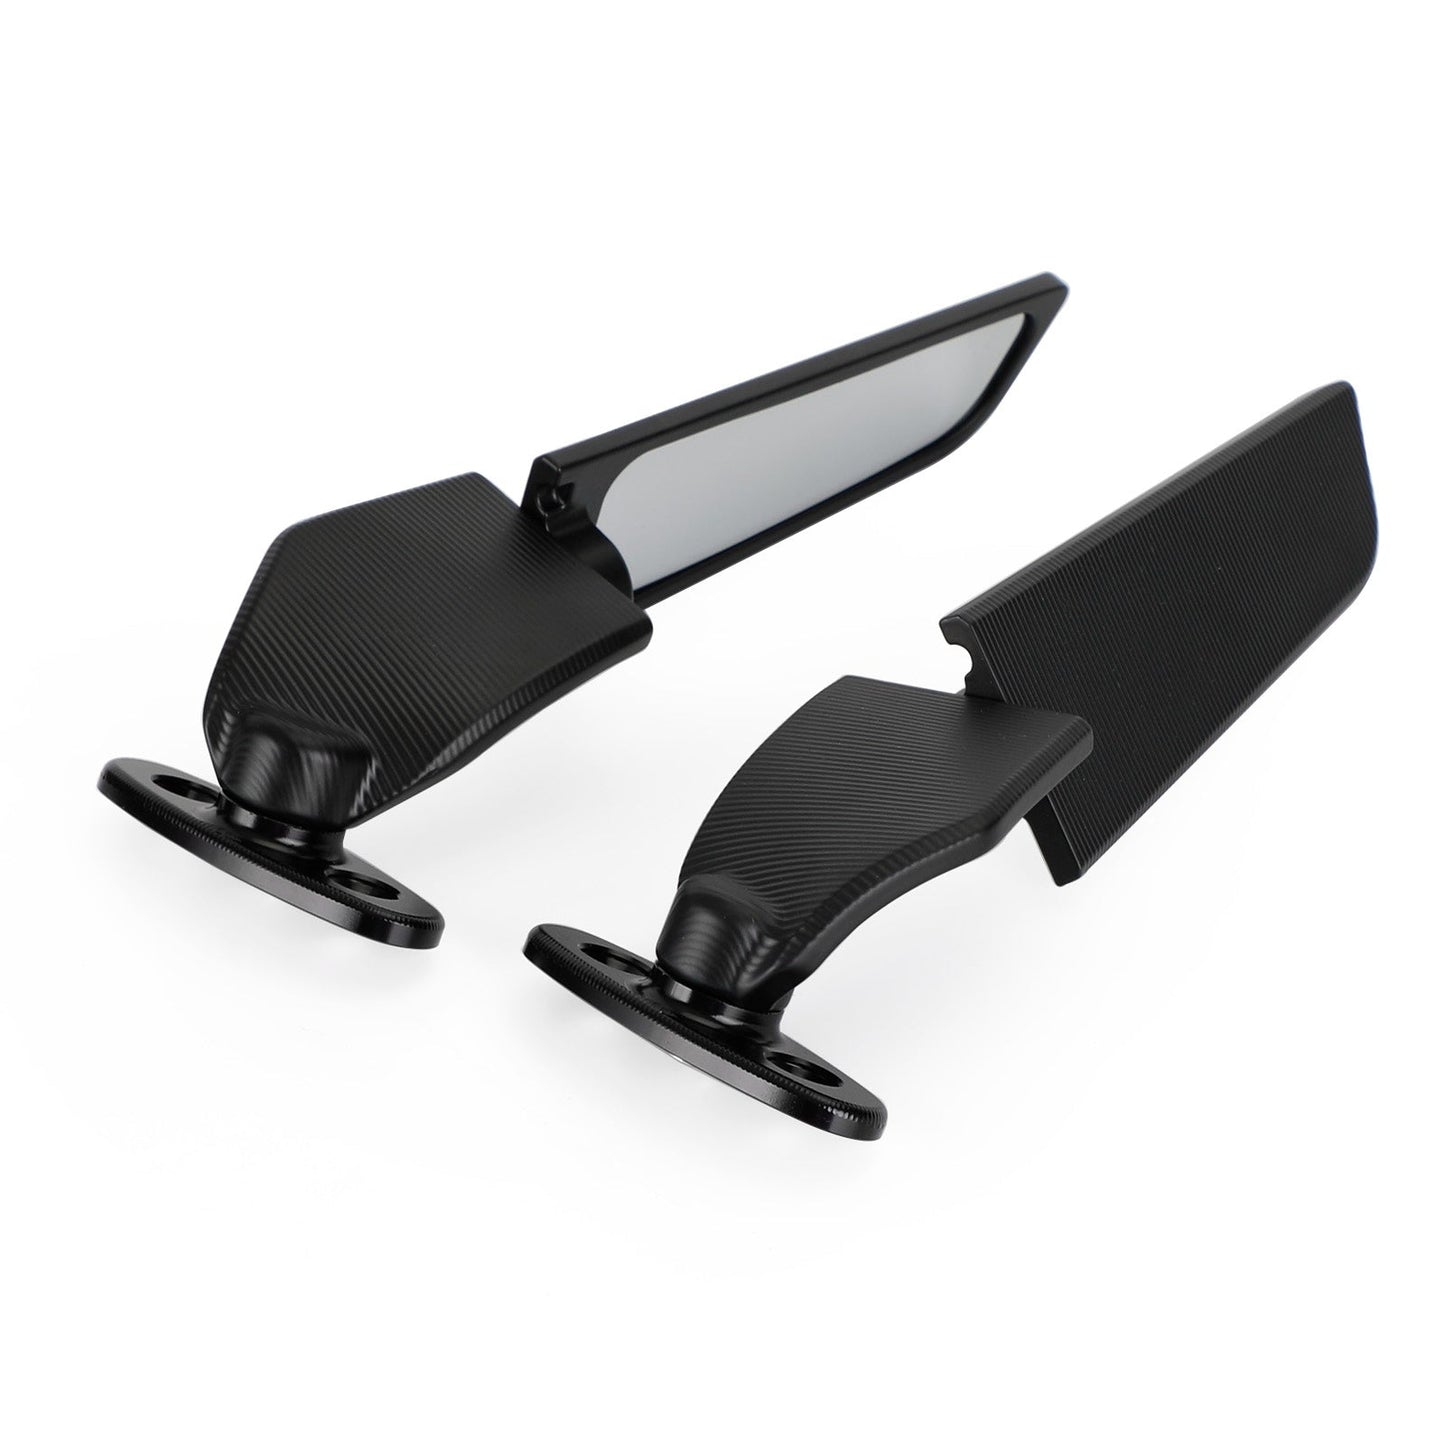 Adjustable Wing Fin Rearview Mirrors For Suzuki GSXR 600/750/1000 2000-2019